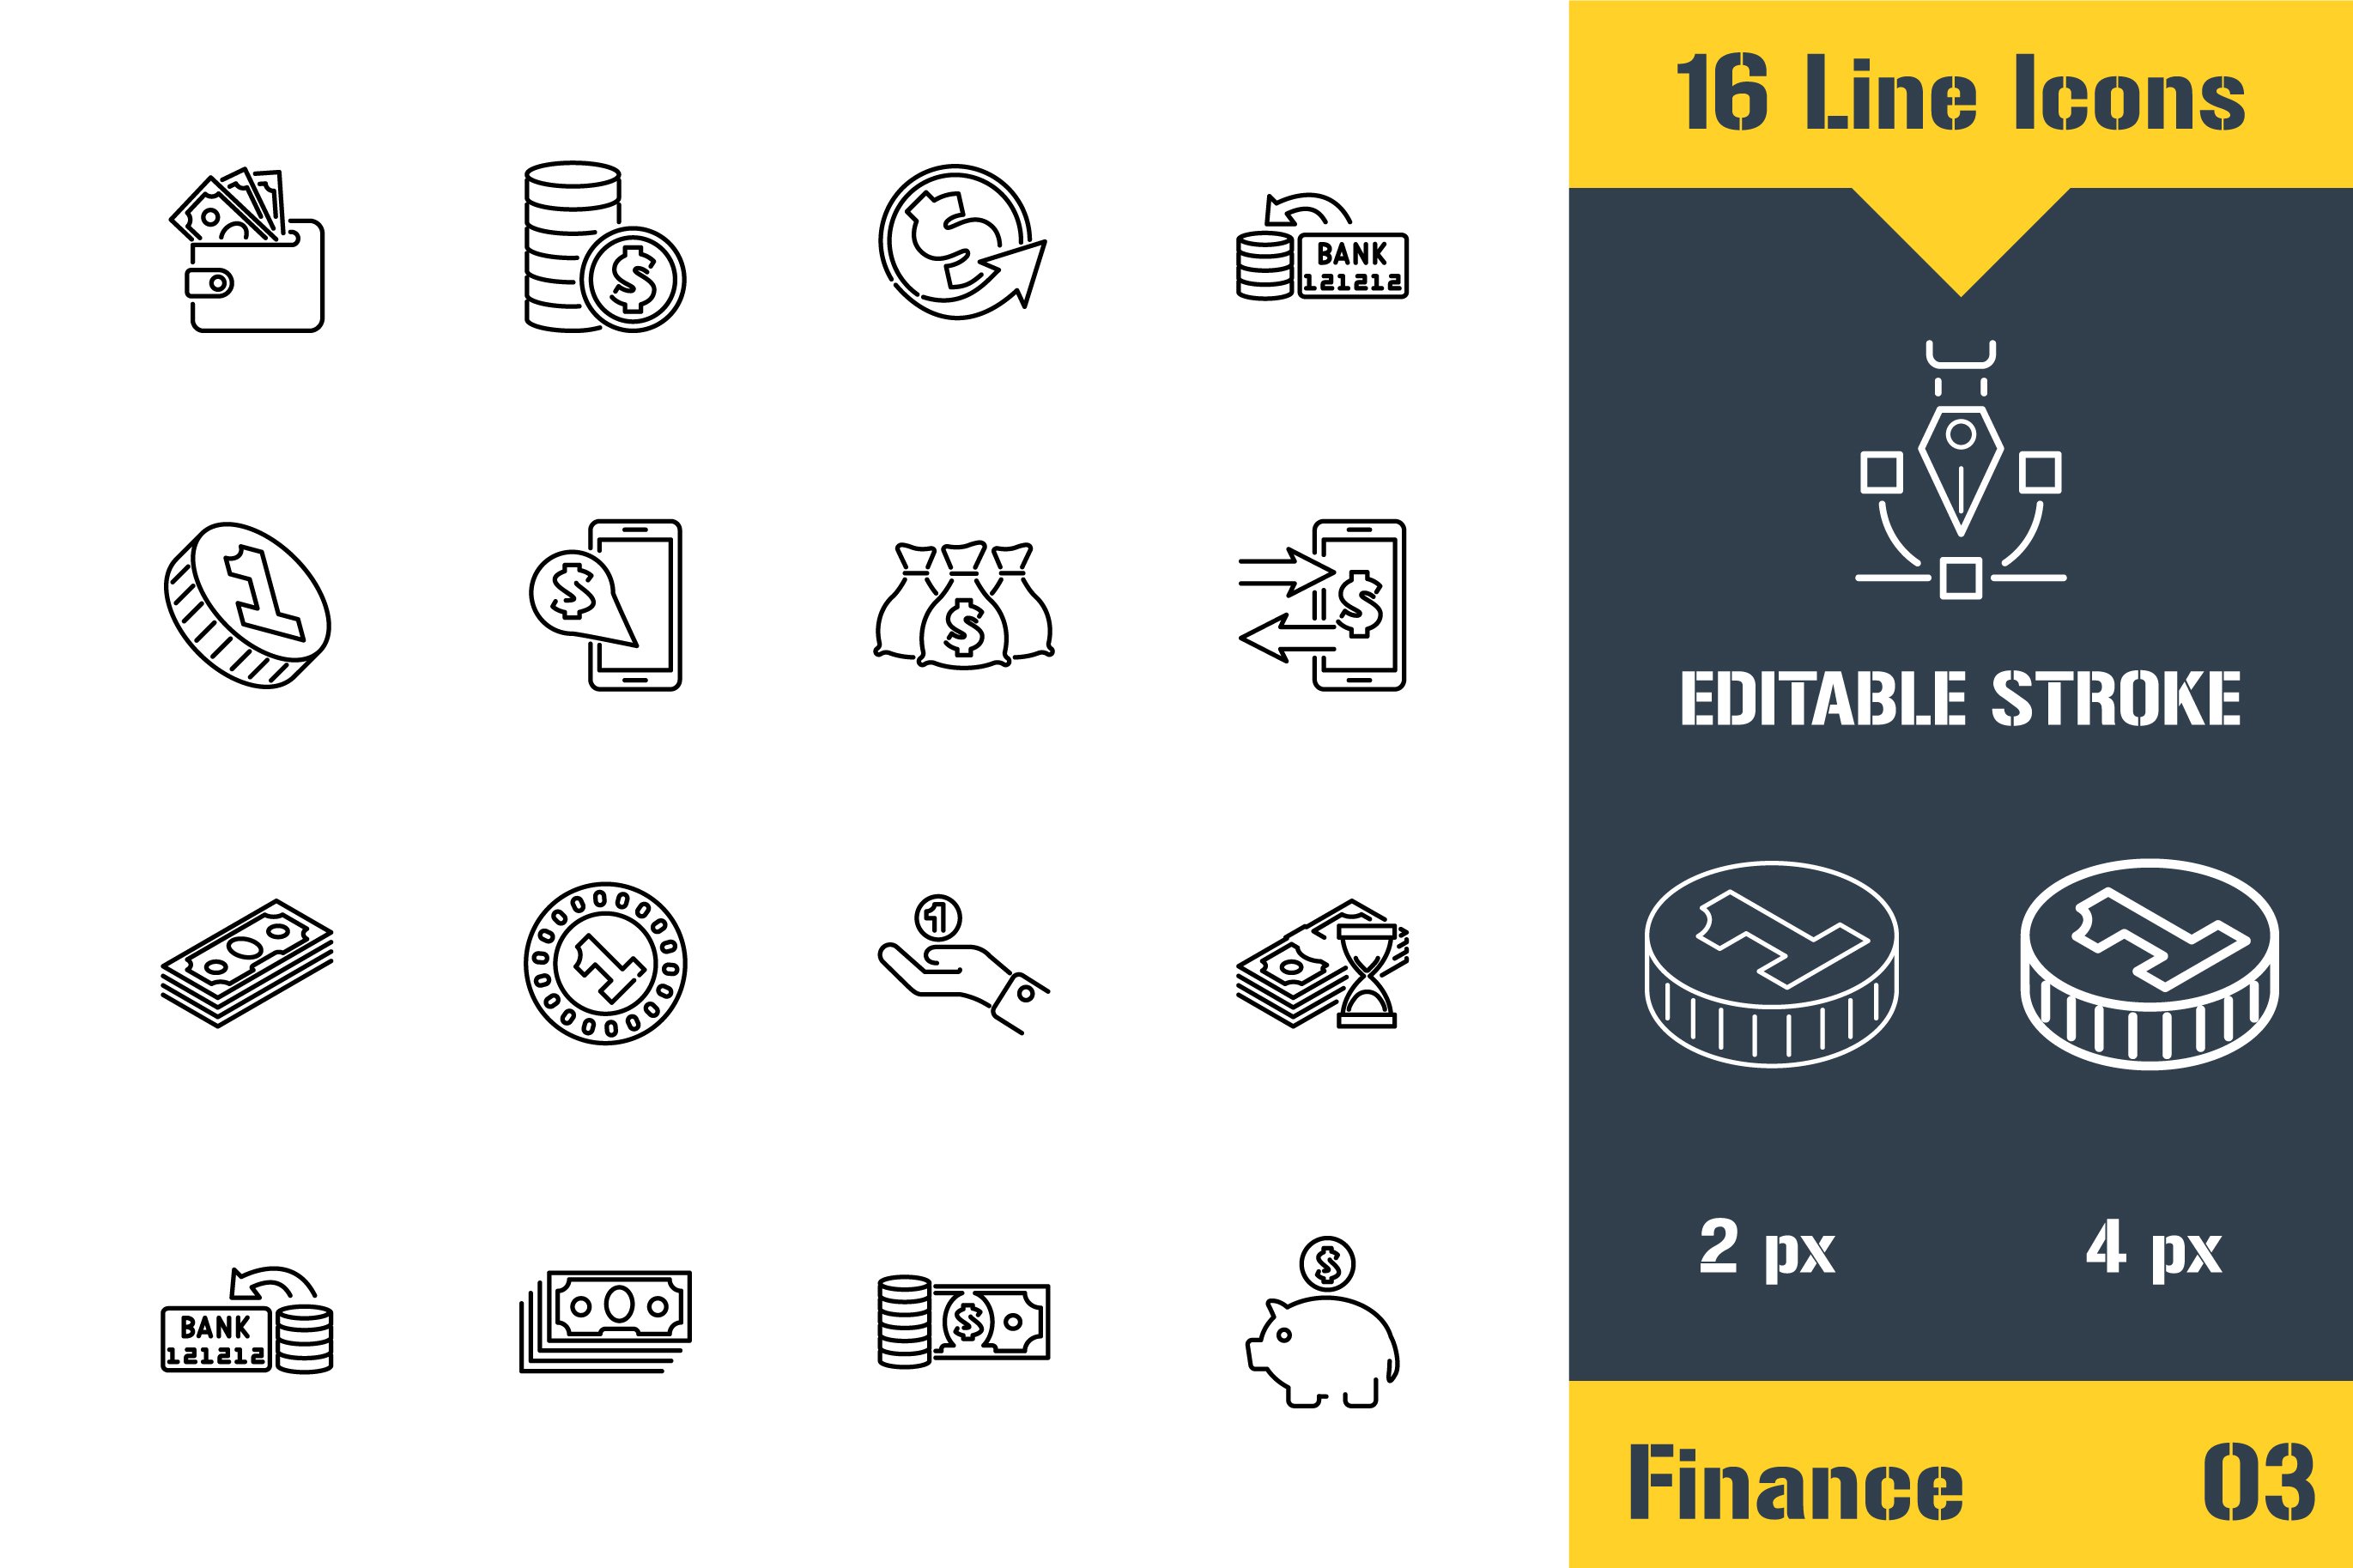 Banking, Finance, Money Icons set. cover image.